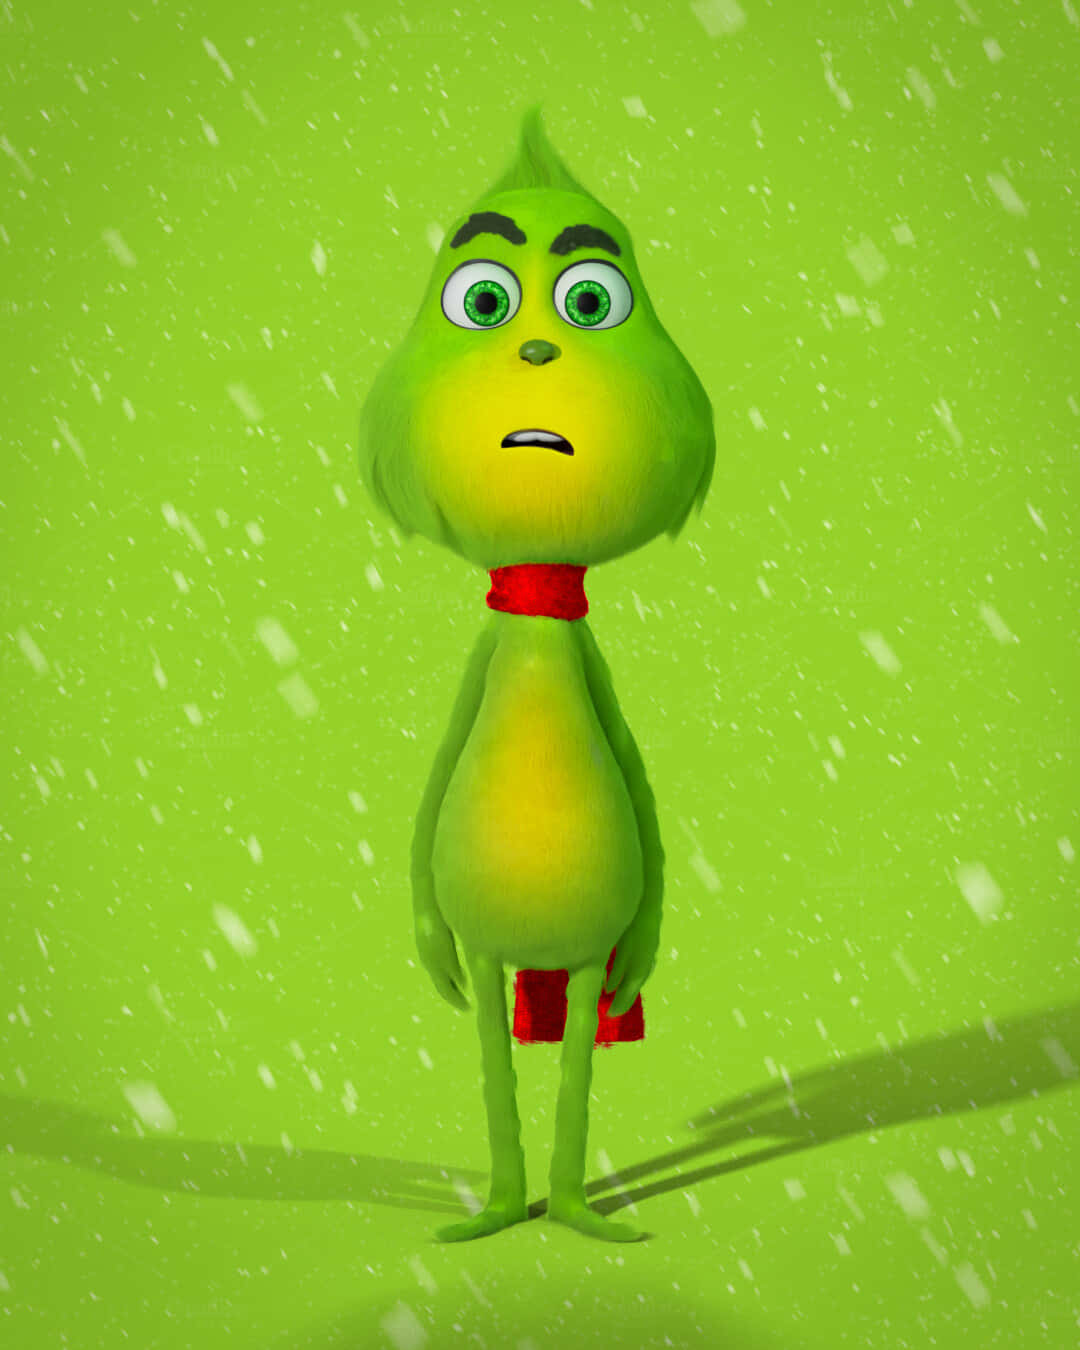 A grumpy Grinch who dislikes Christmas